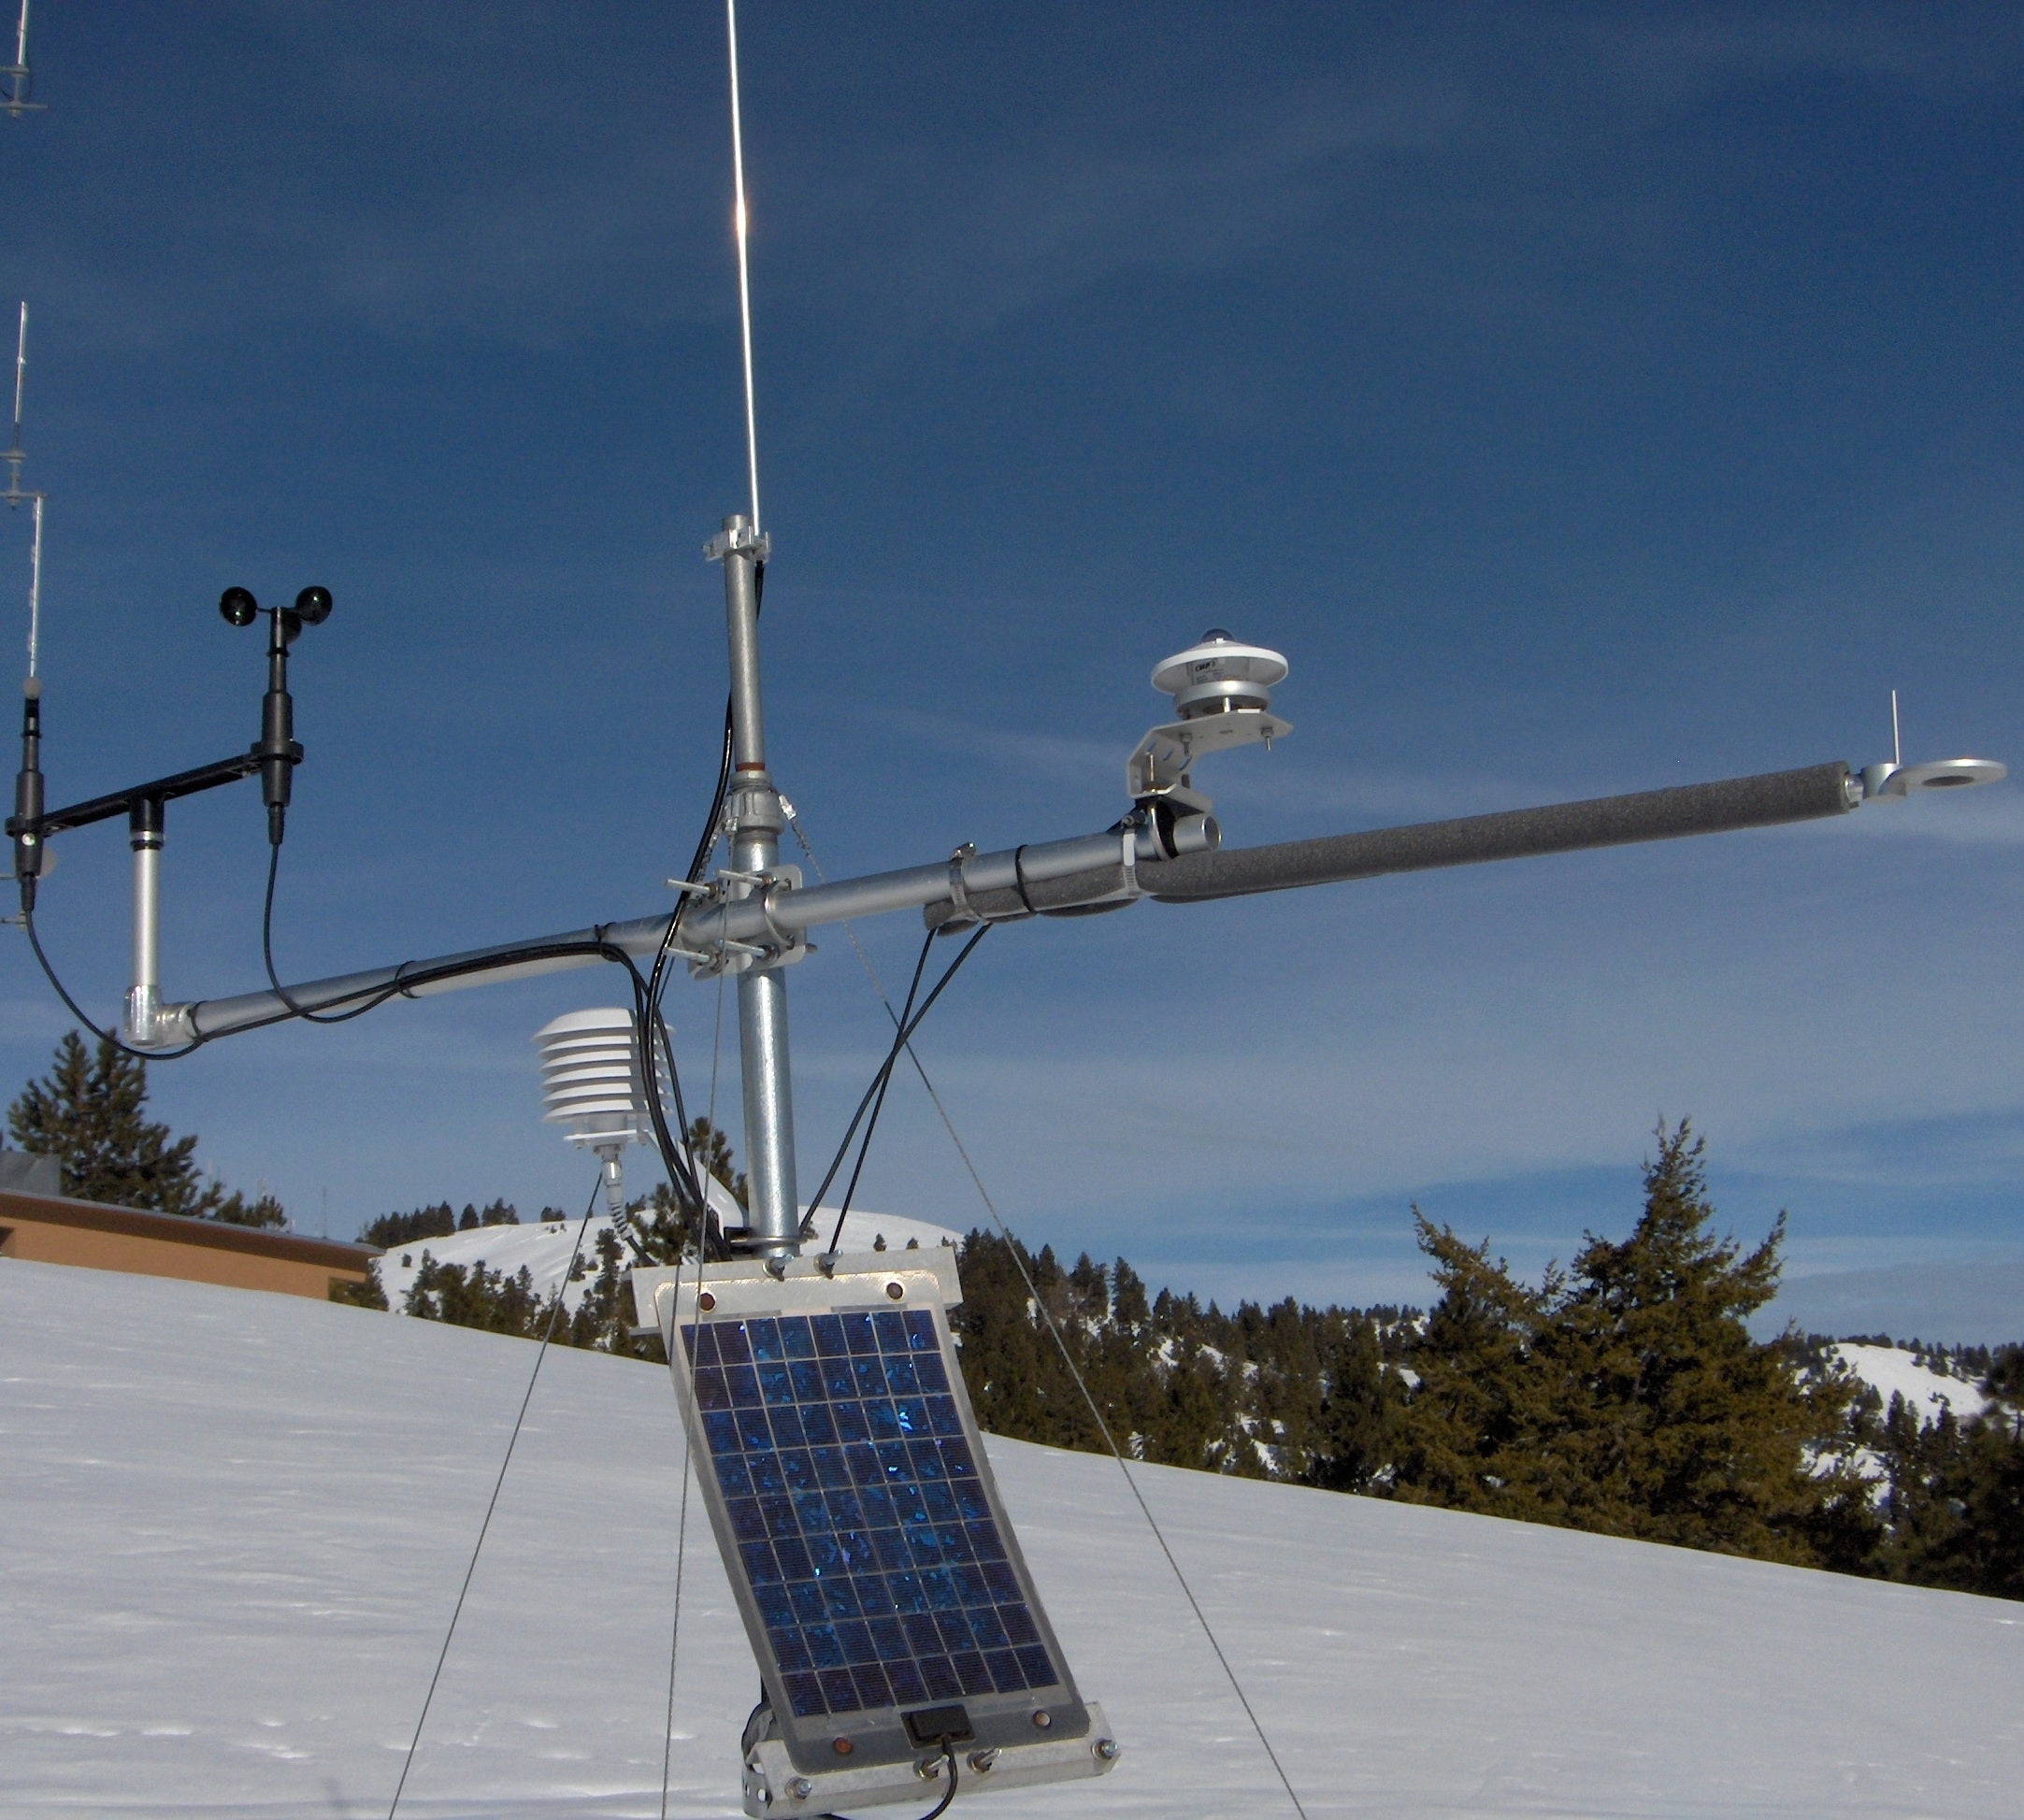 solar equipment in the snow